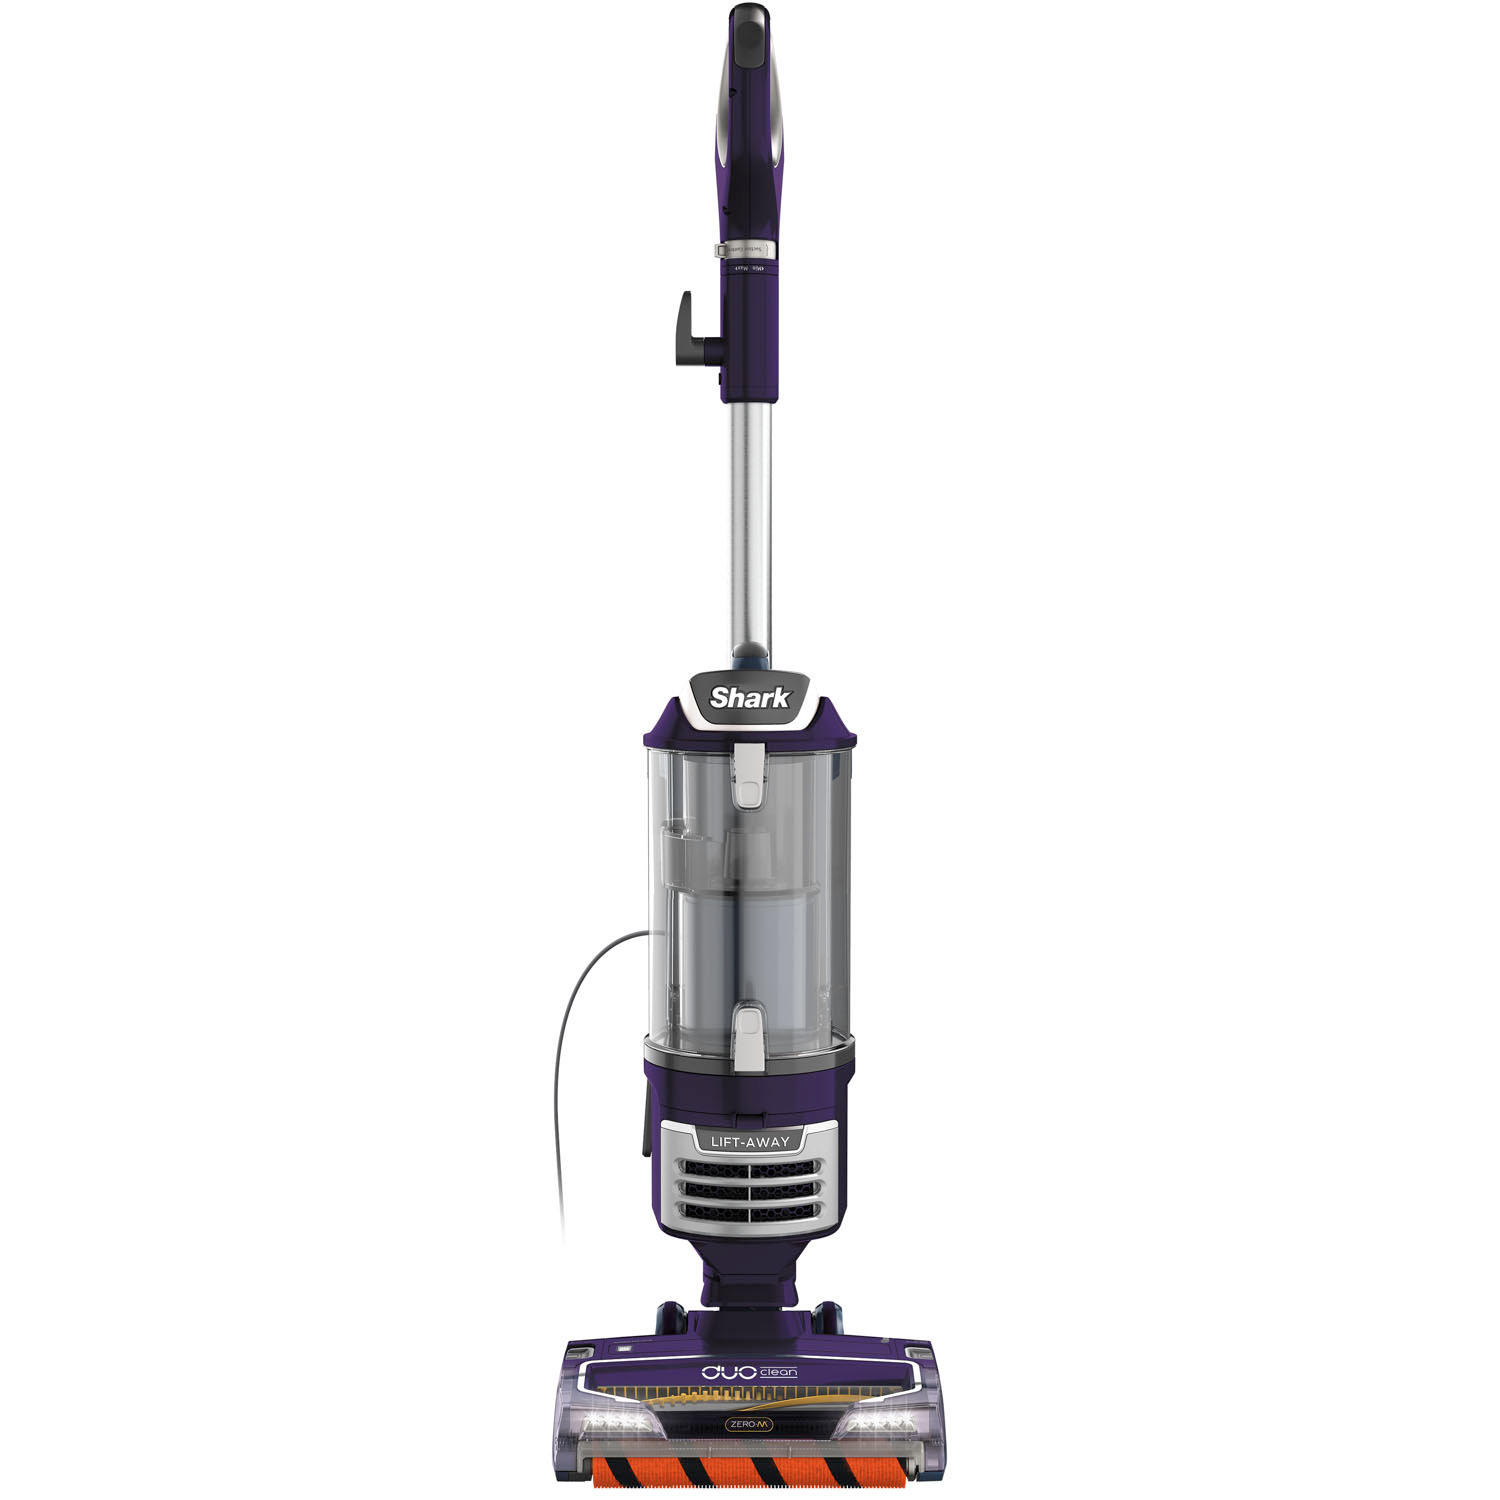 Shark Rotator Lift-Away DuoClean Pro With Self-Cleaning Brushroll Upright Vacuum ZU785 $237.98 at Sam's Club